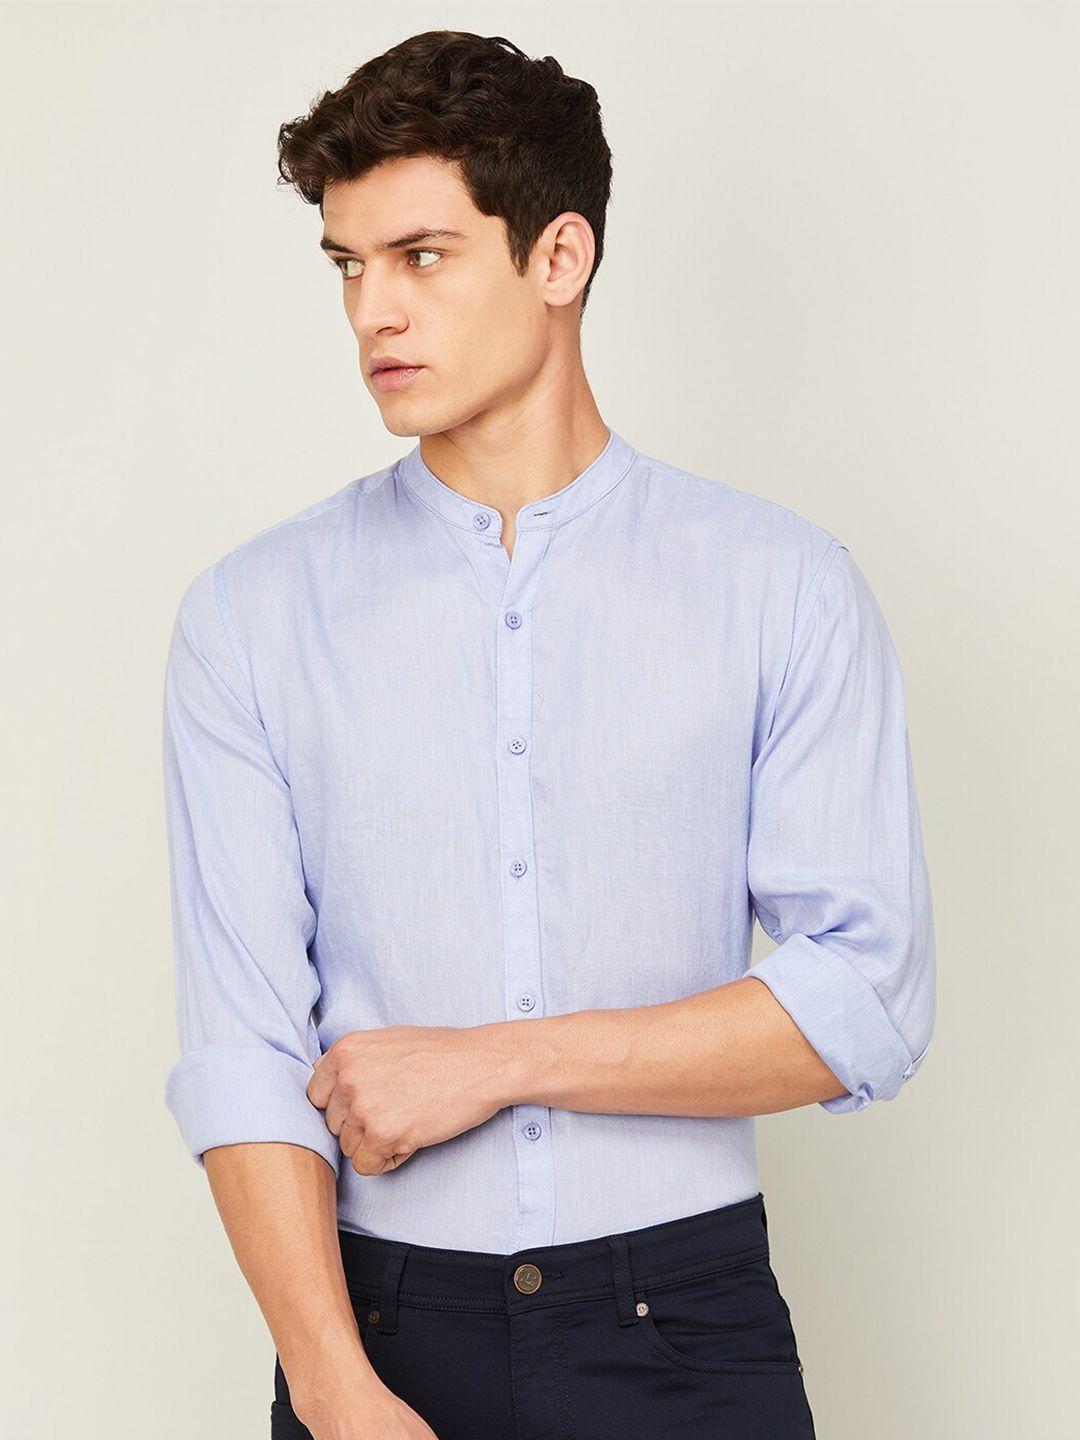 code-by-lifestyle-mandarin-collar-long-sleeves-linen-casual-shirt